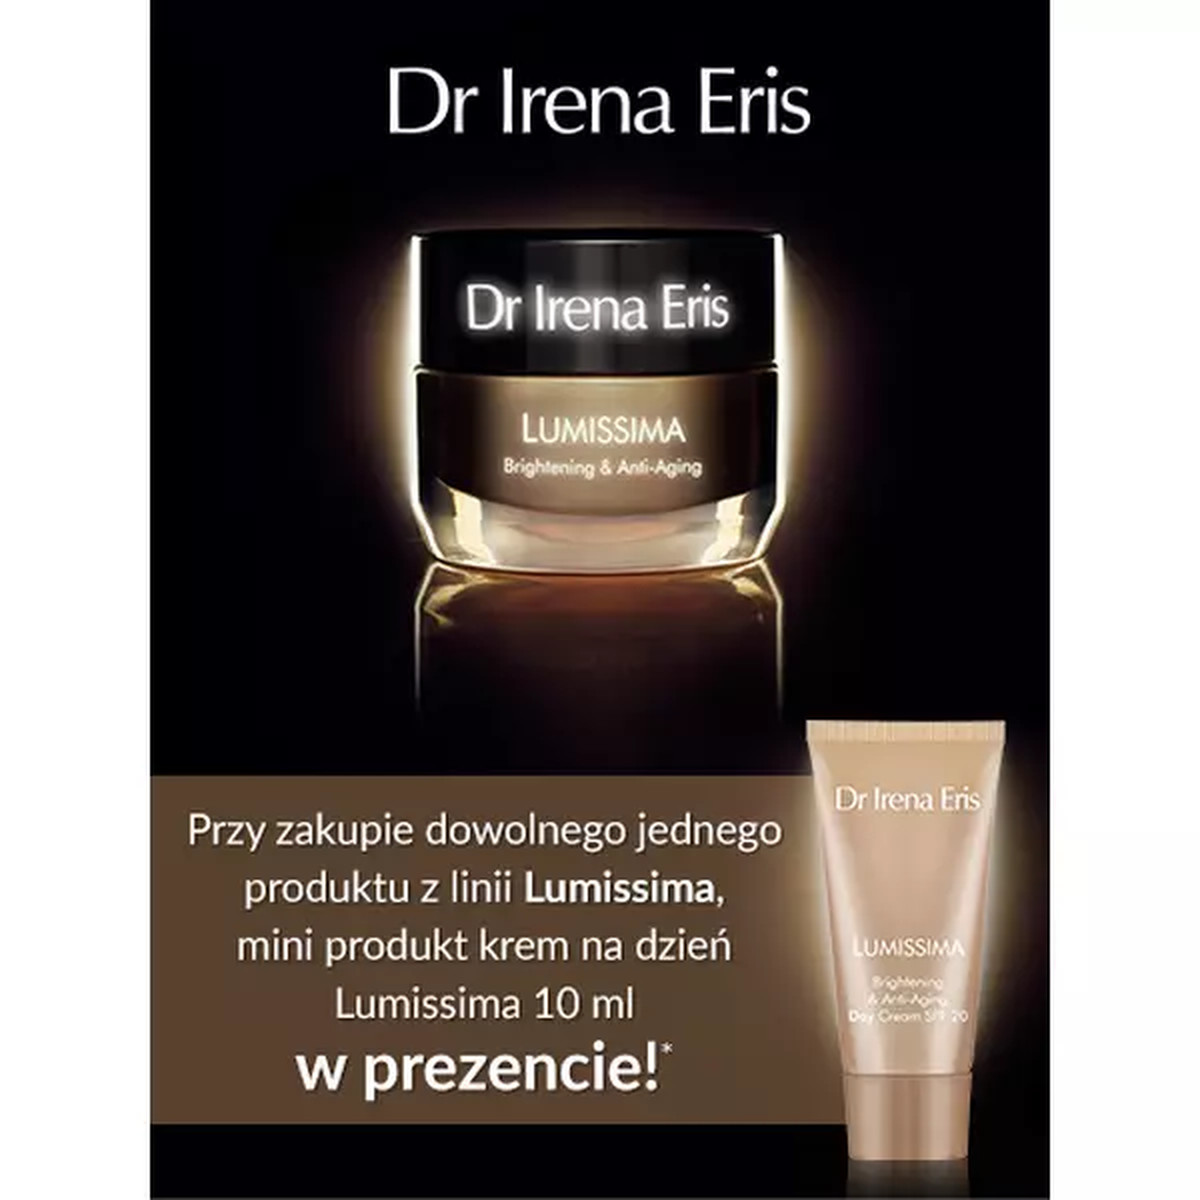 Dr Irena Eris Lumissima Krem Na Dzień Promocja z gratisem 10ml